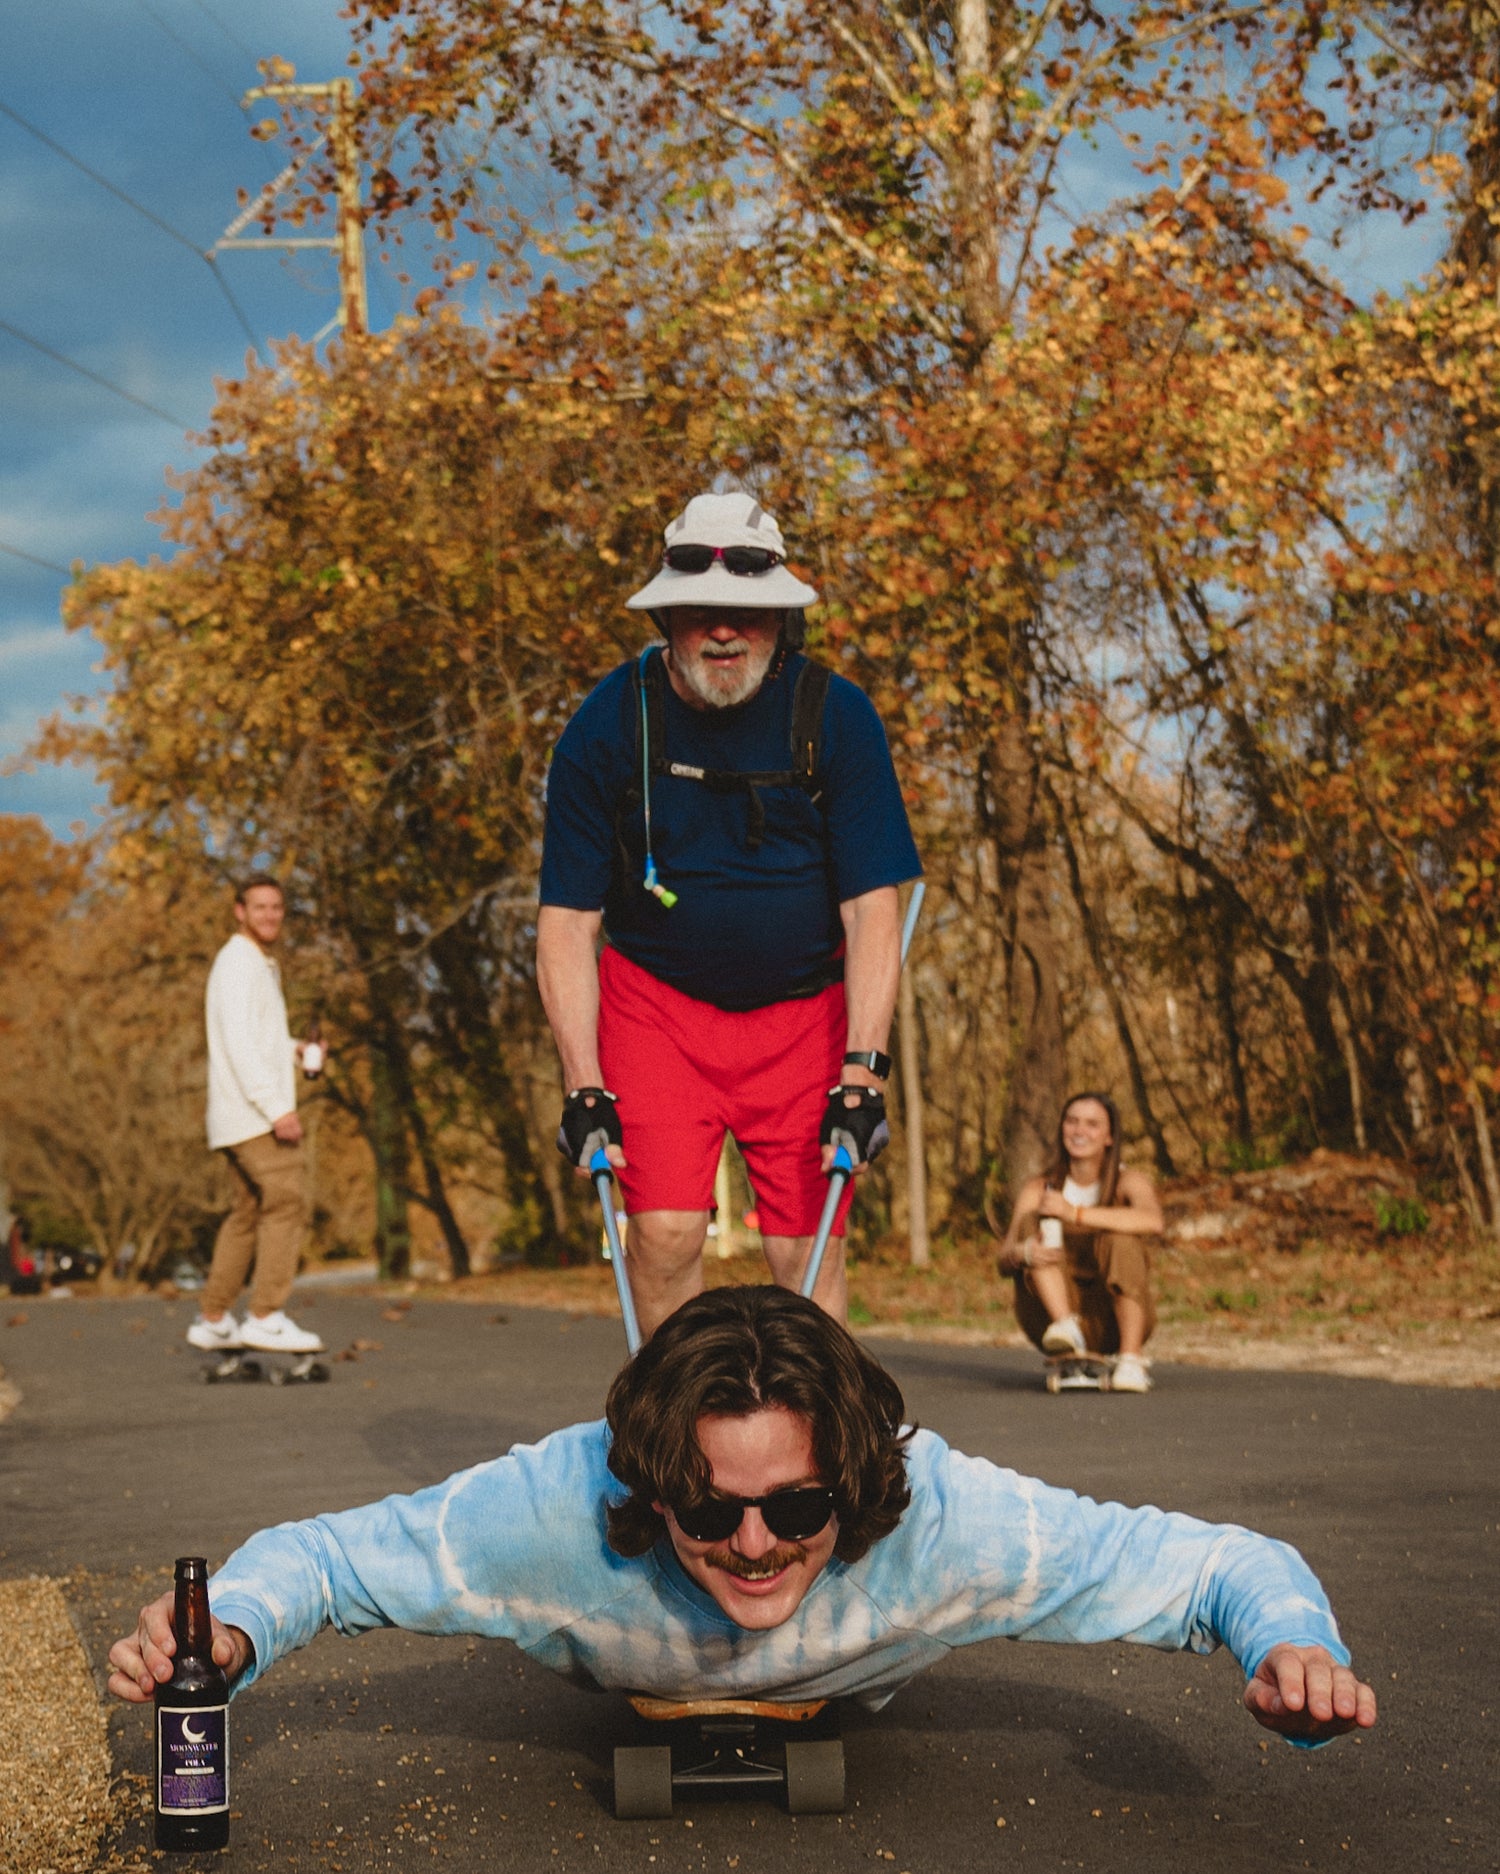 Older man pushing young man on skateboard holding a Moonwater beverage